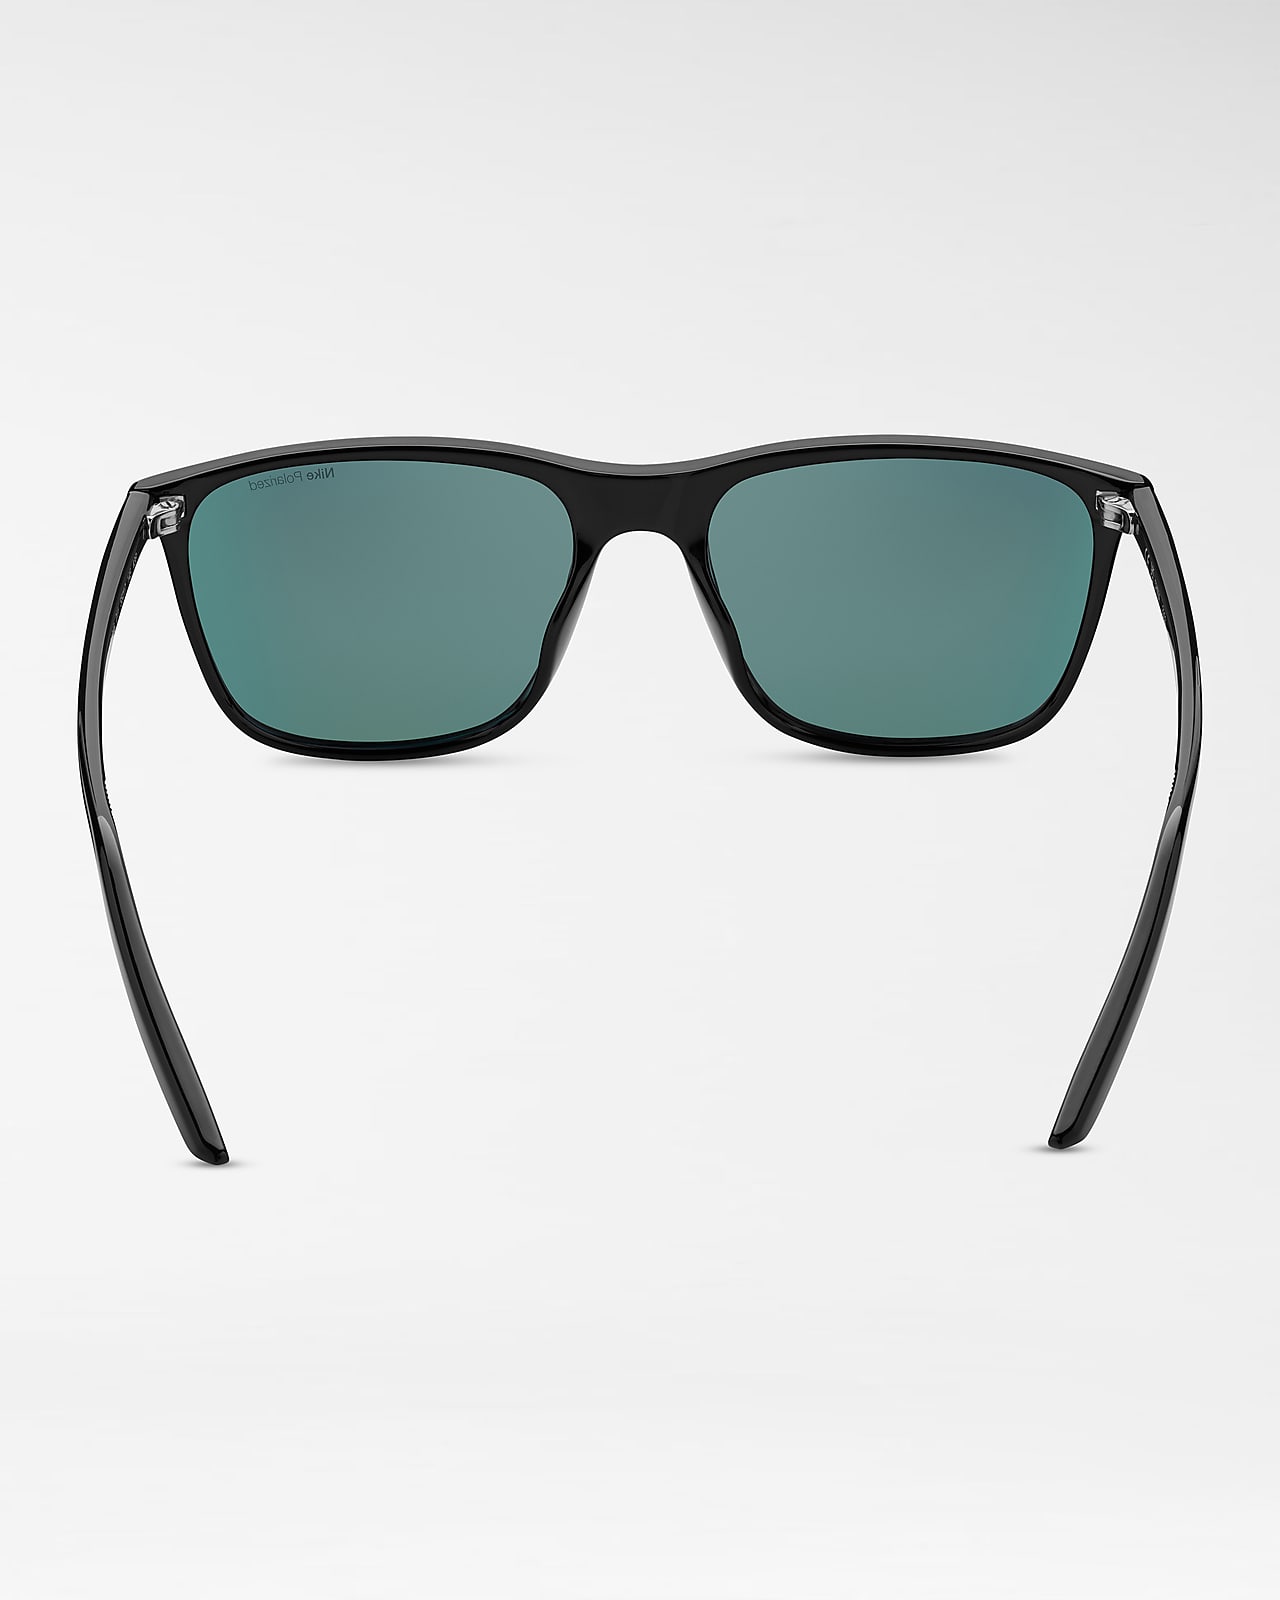 Tierra Running Sunglasses - Black polarized sunglasses for women